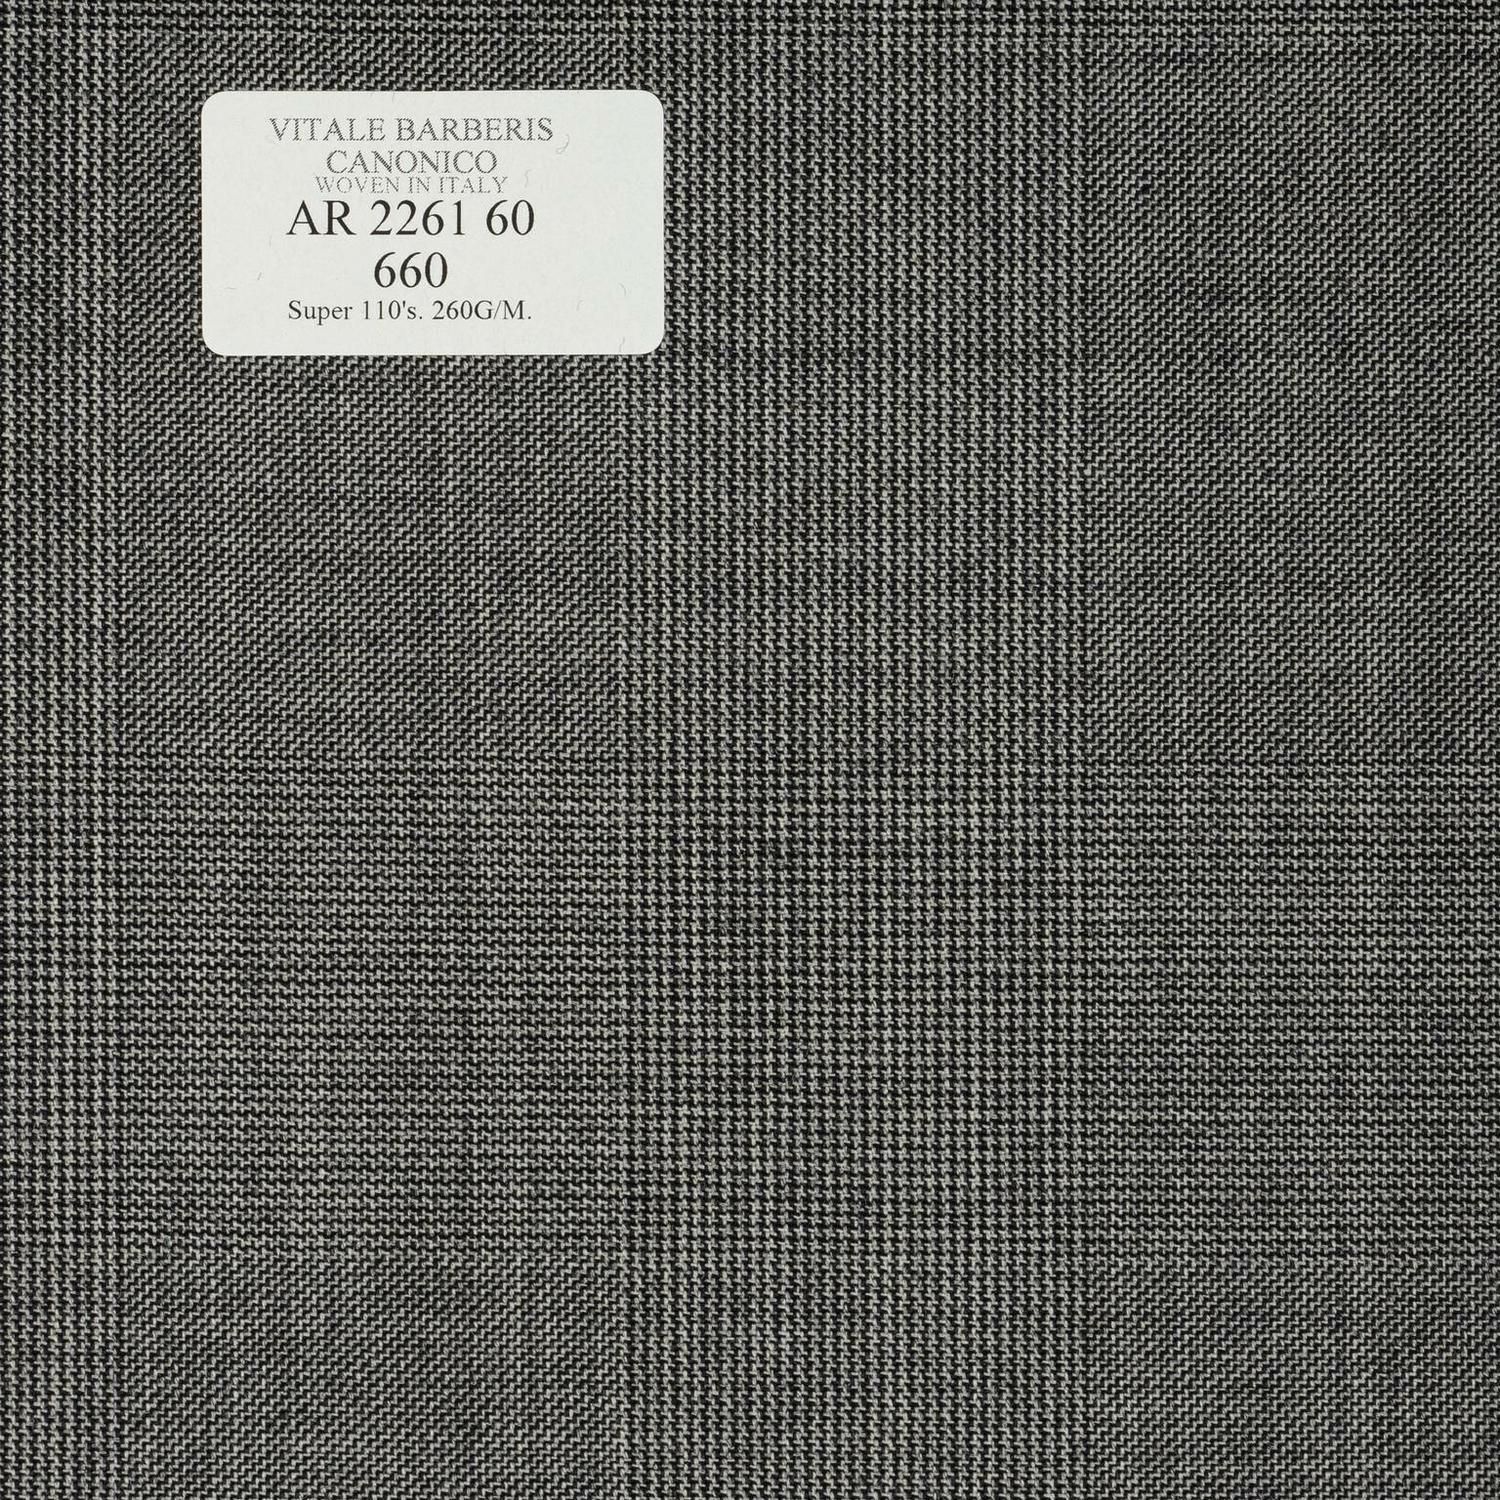 AR 2261 60 CANONICO - 100% Wool - Xám Trơn